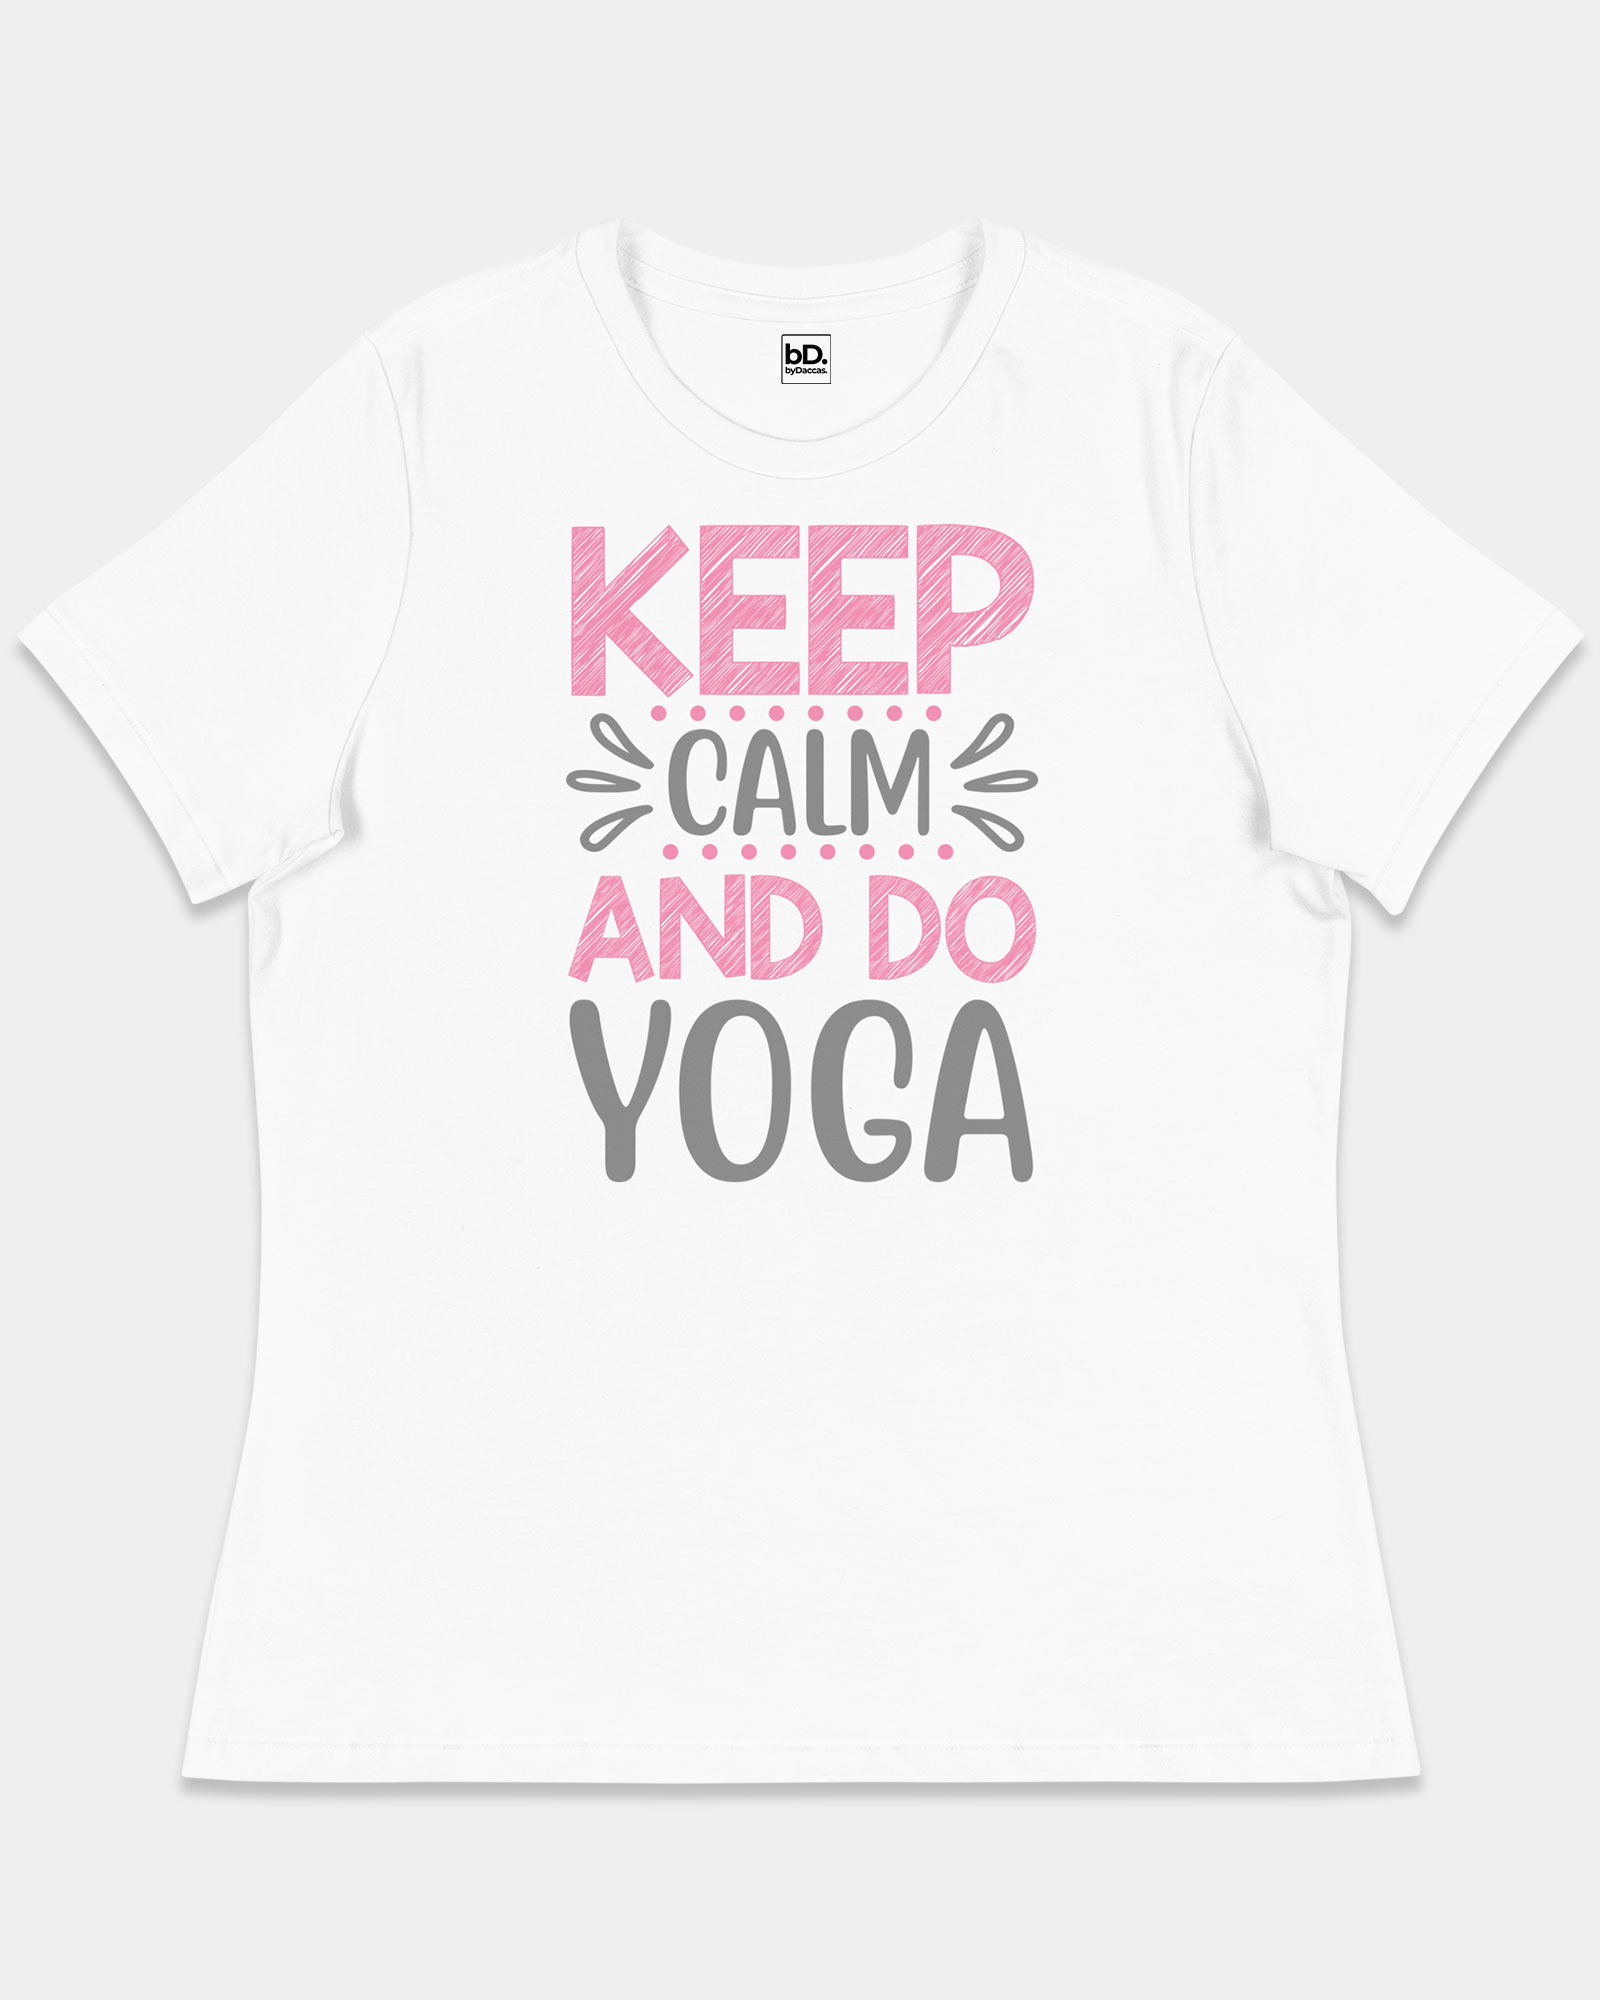 Keep calm and do yoga tshirt for women